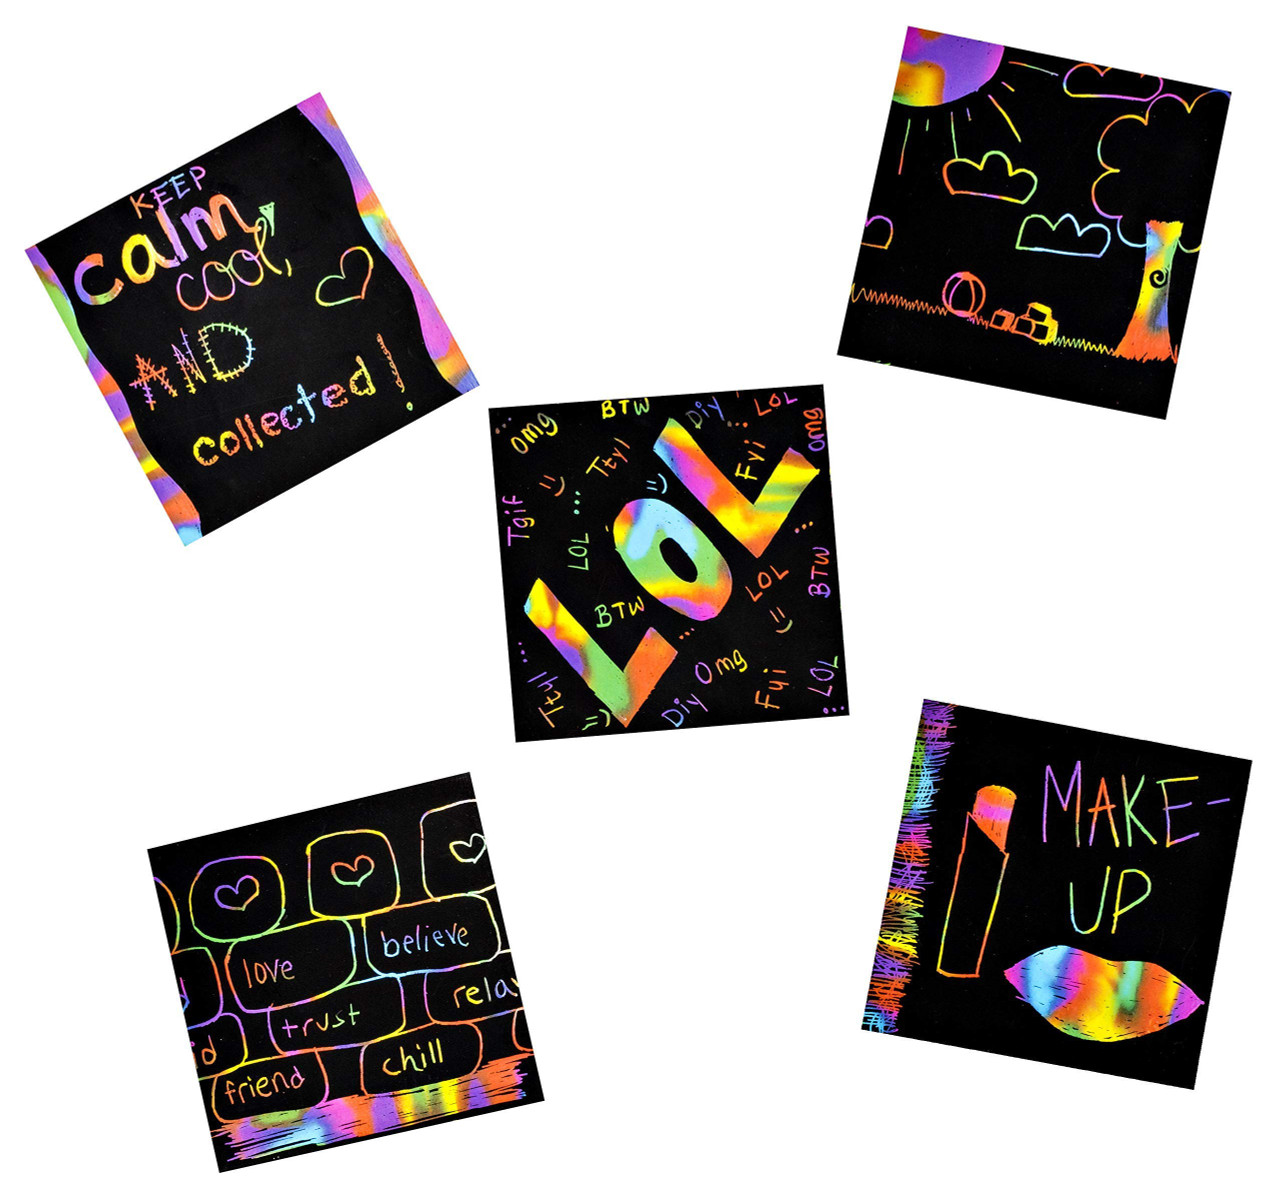 Rainbow Scratch Paper - Scratch Art Pad base